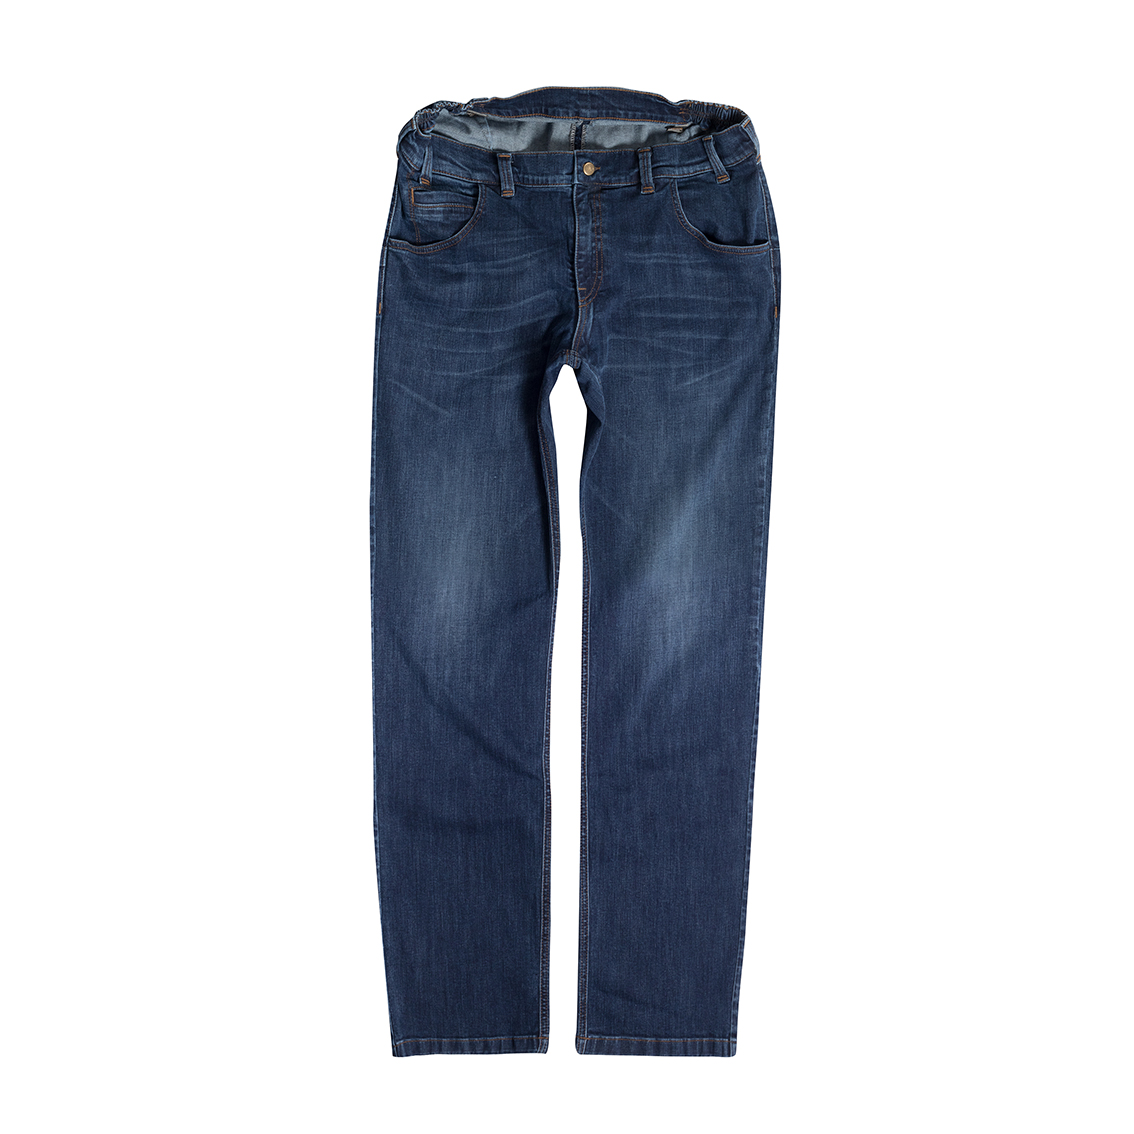 Herren Jeans  Fashion washed, blau MIKE 10391 44